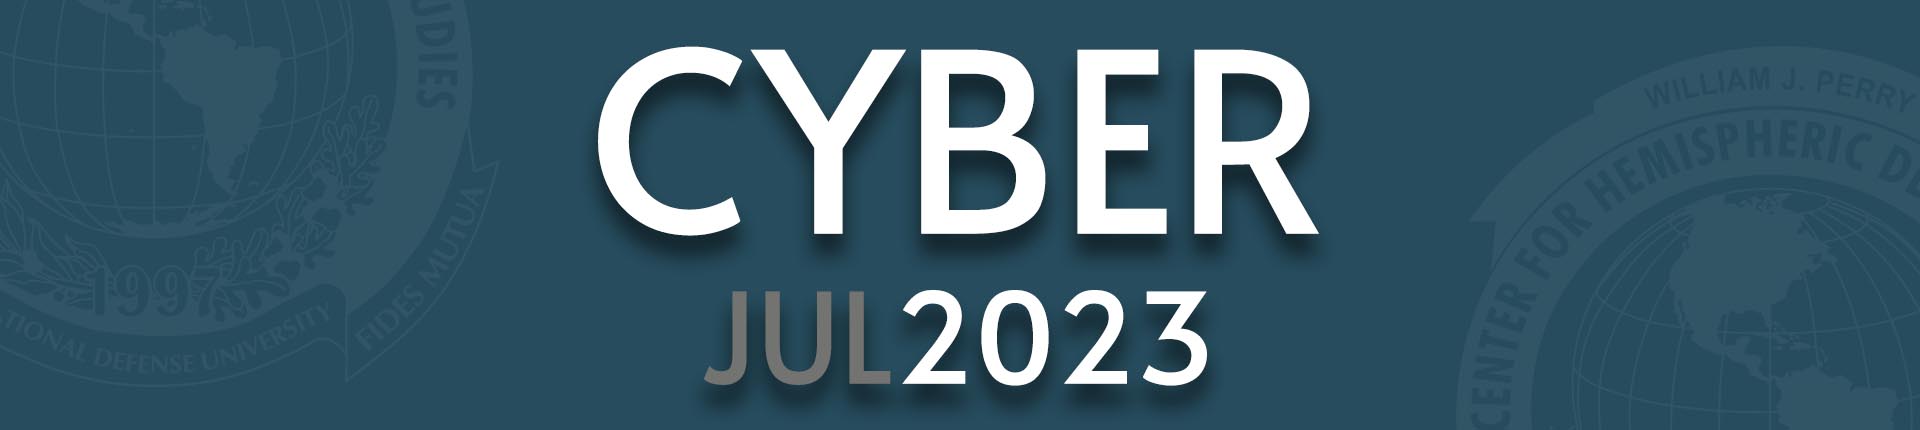 course masthead - CYBER 2023